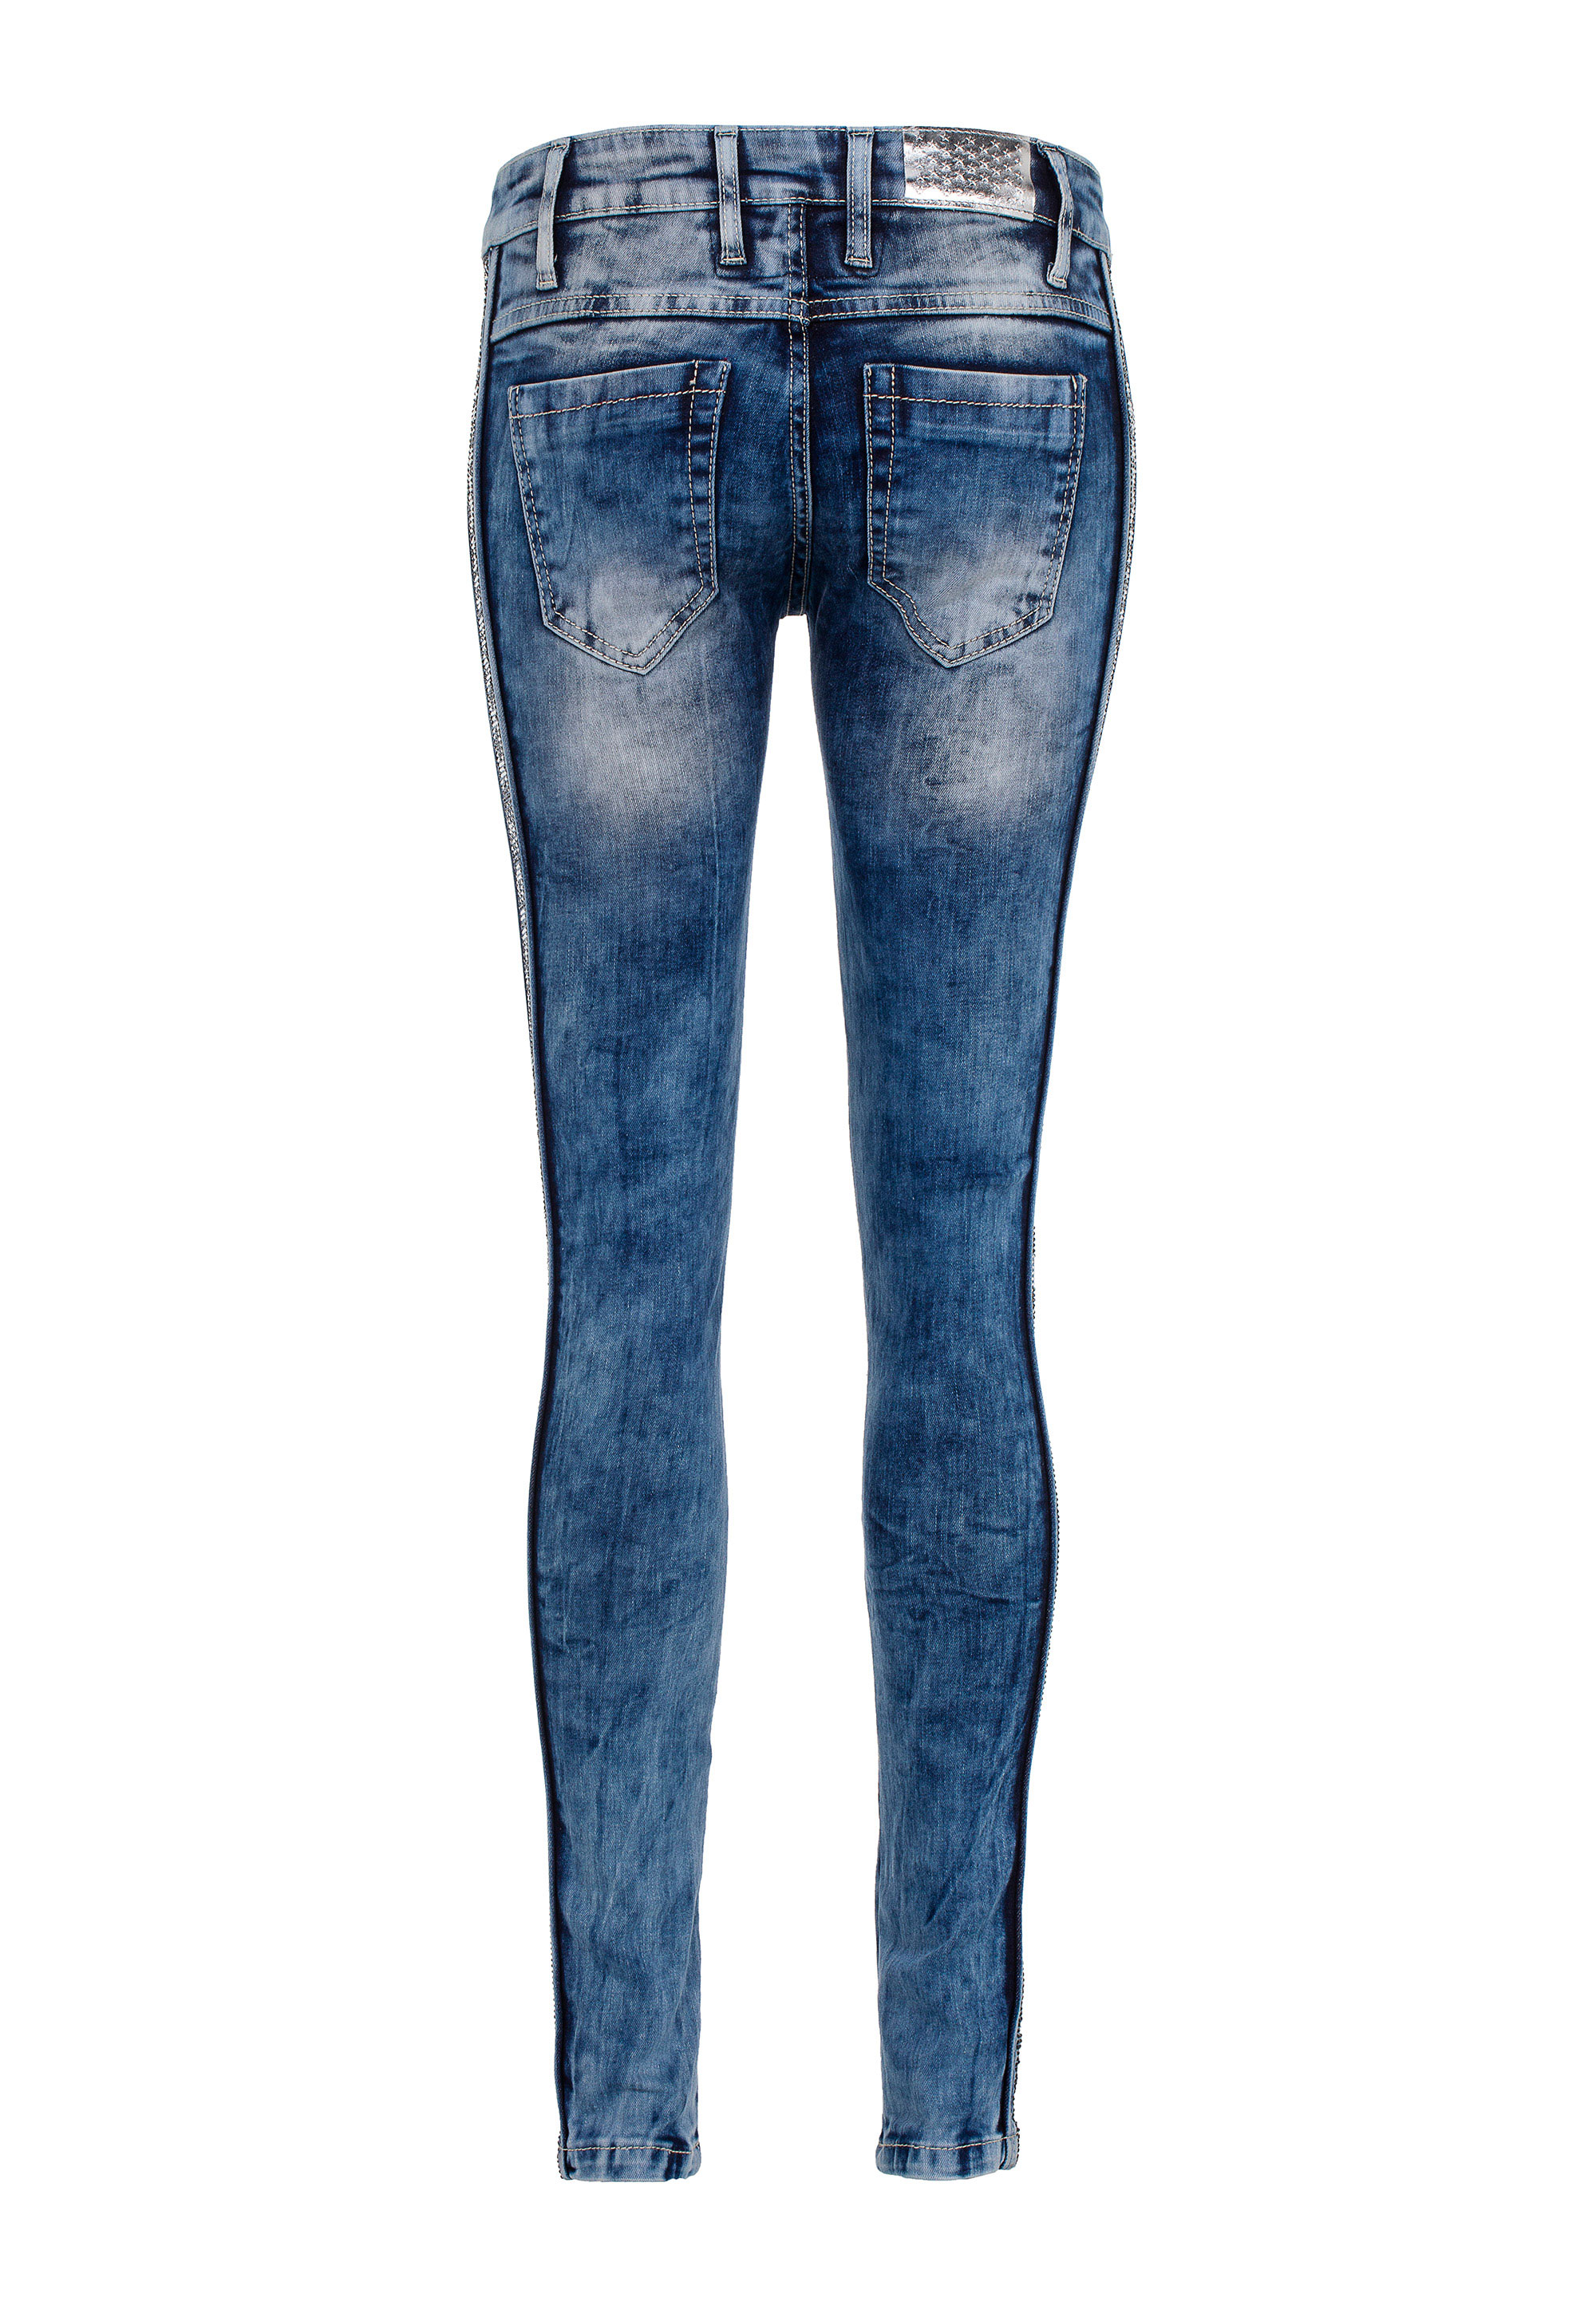 CIPO & BAXX Jeans in Blau 